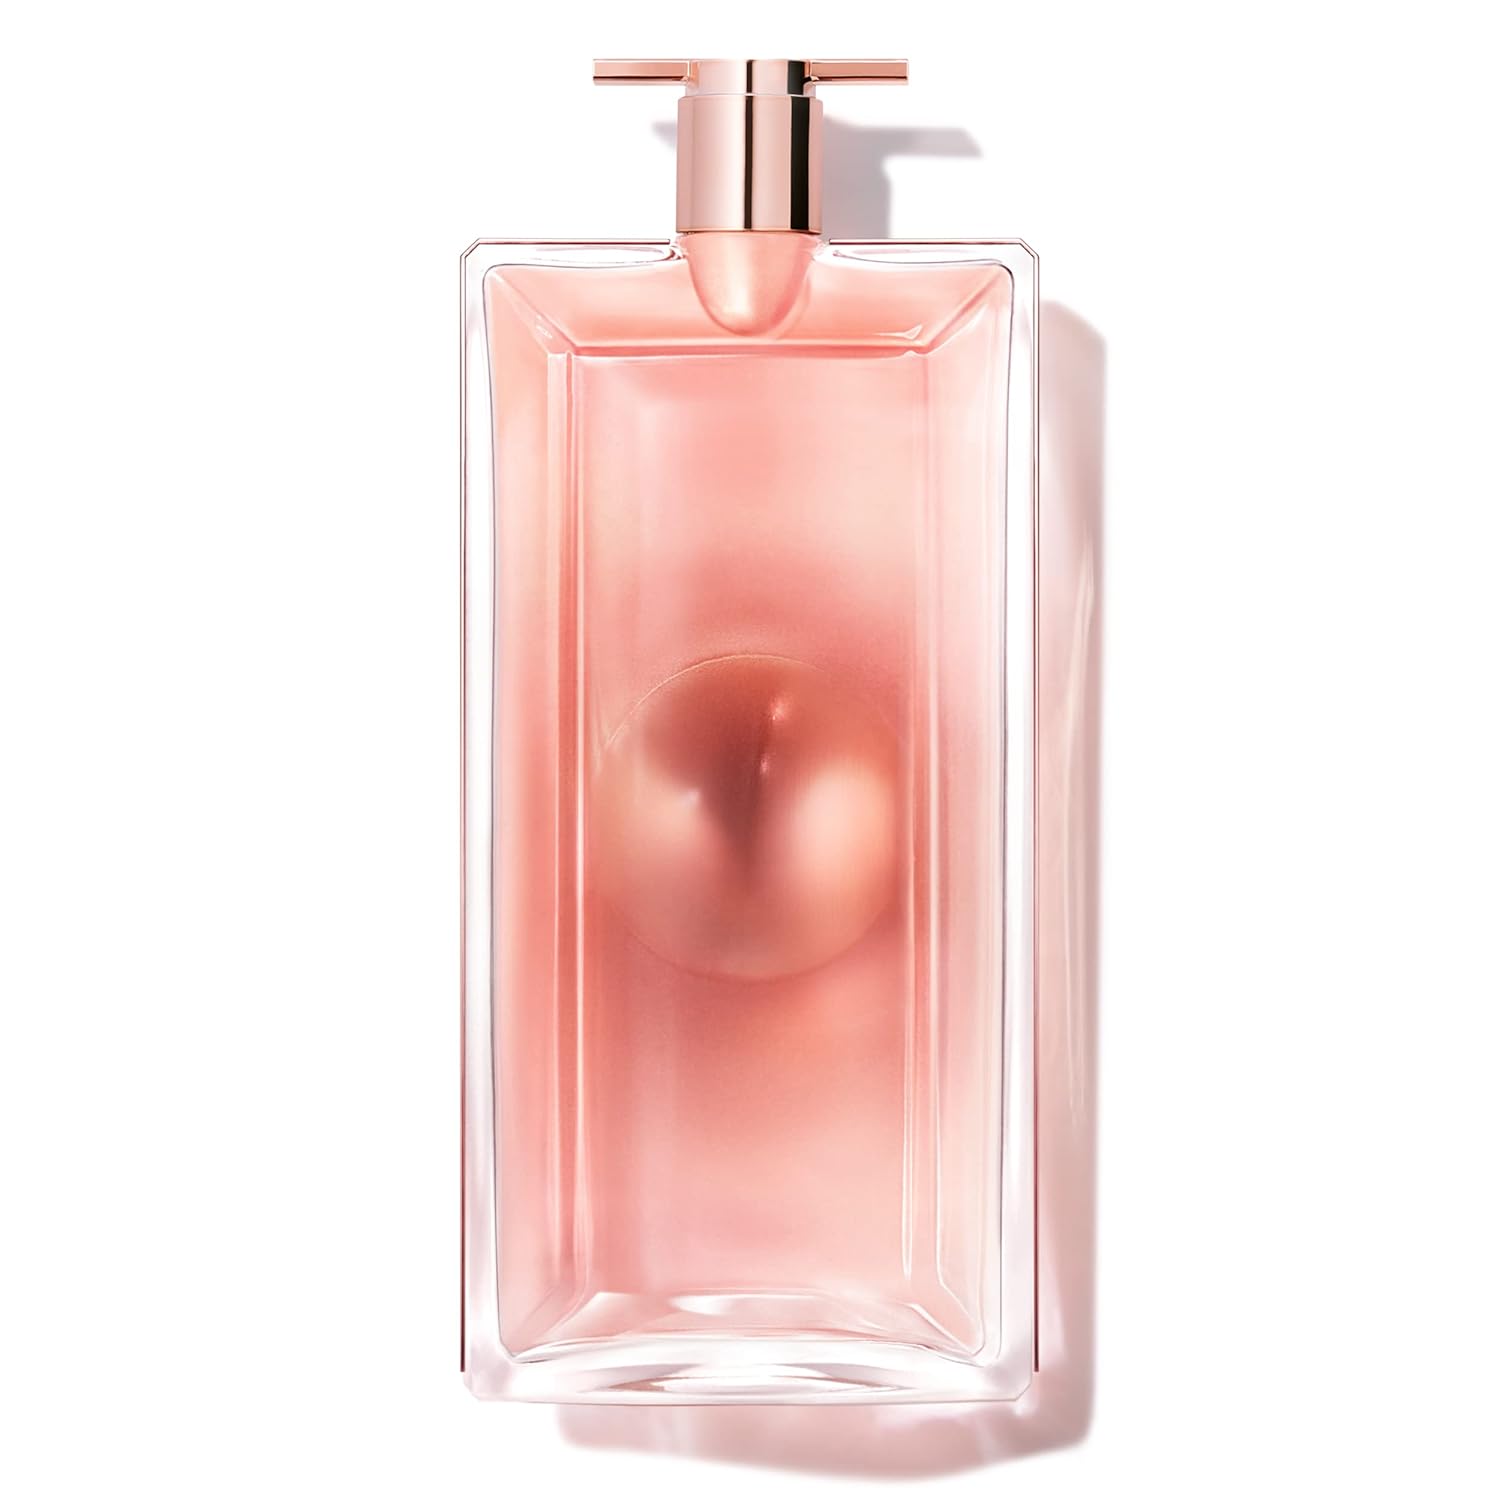 Lancôme Idôle Aura Eau de Parfum - Long Lasting Fragrance with Notes of Rose, Jasmine & Salted Vanilla - Sunny & Floral Women's Perfume - 3.4 Fl Oz